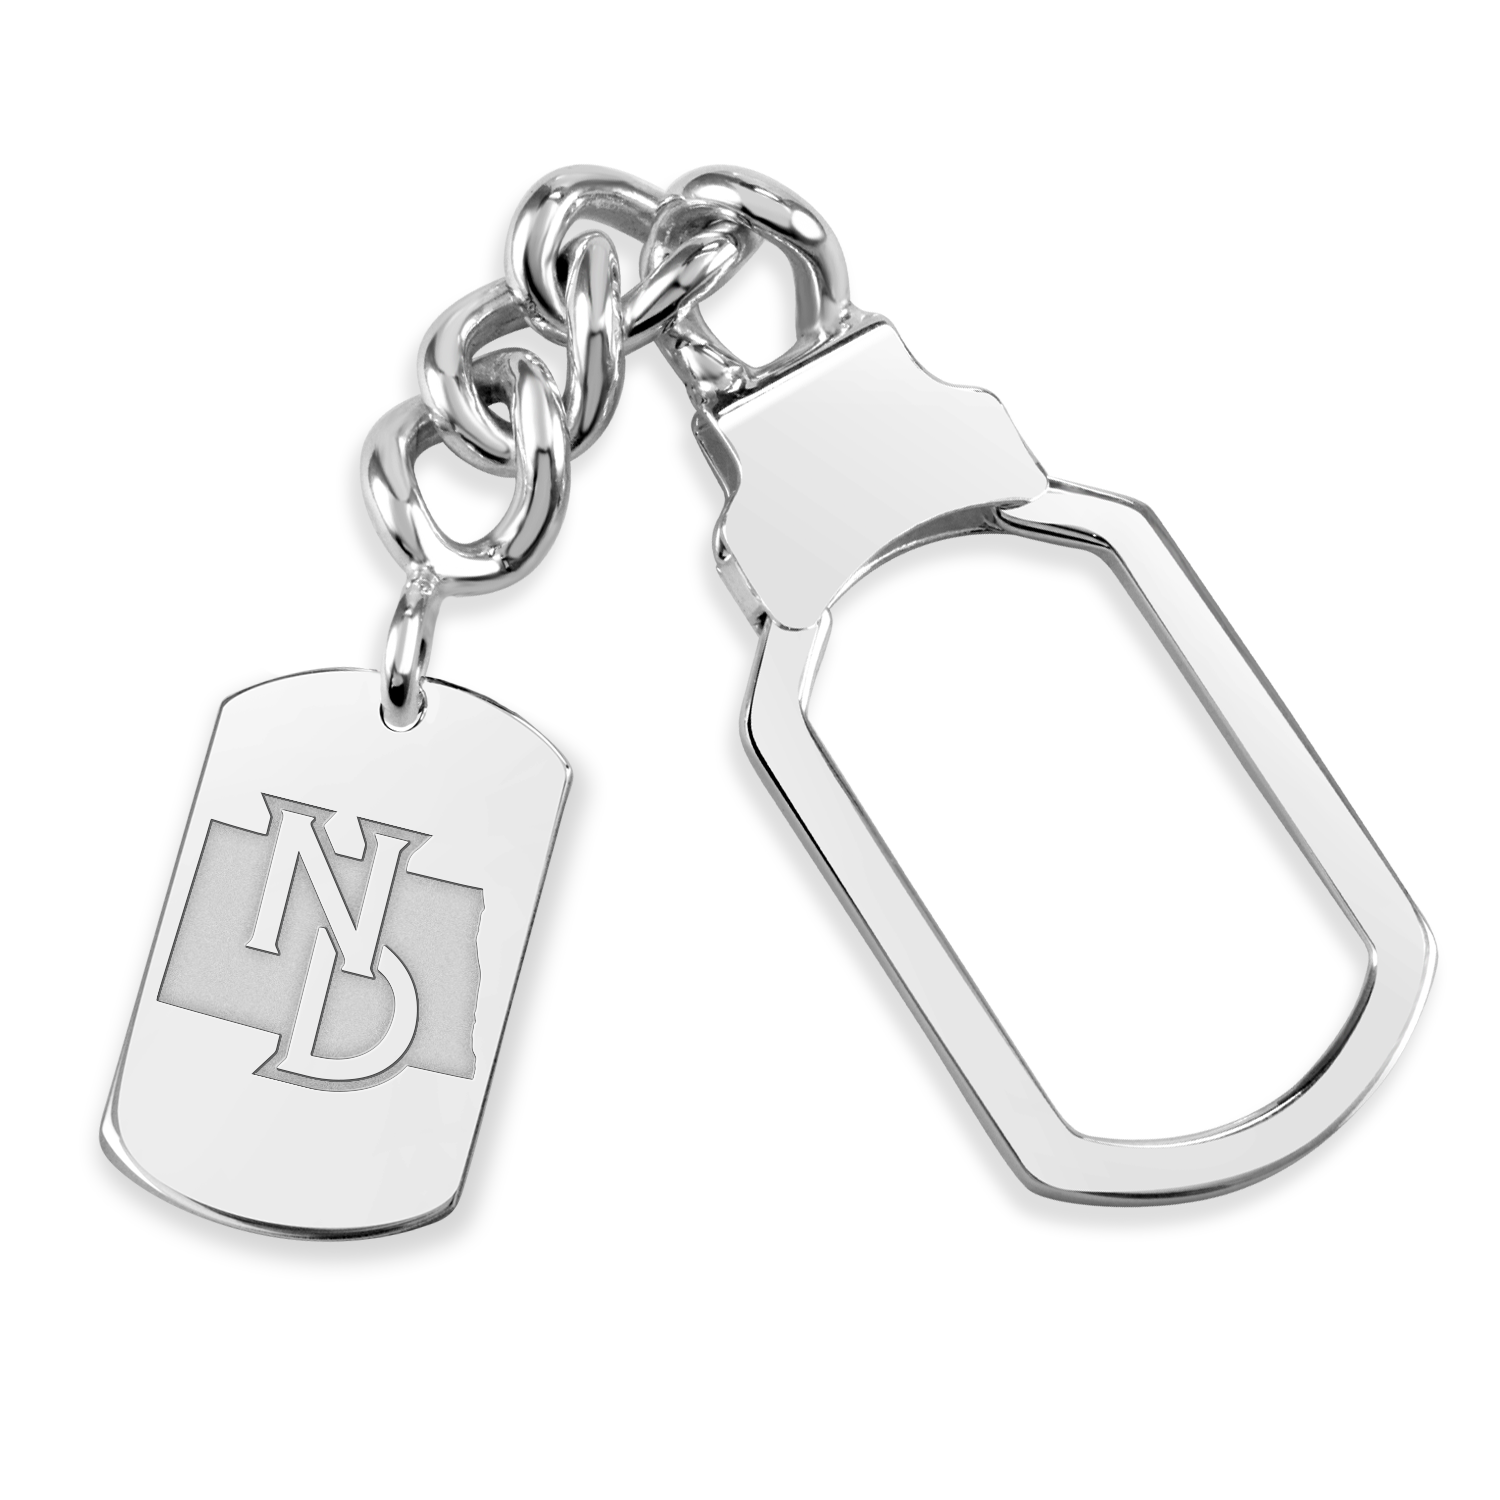 North Dakota Tag Tension Key Chain